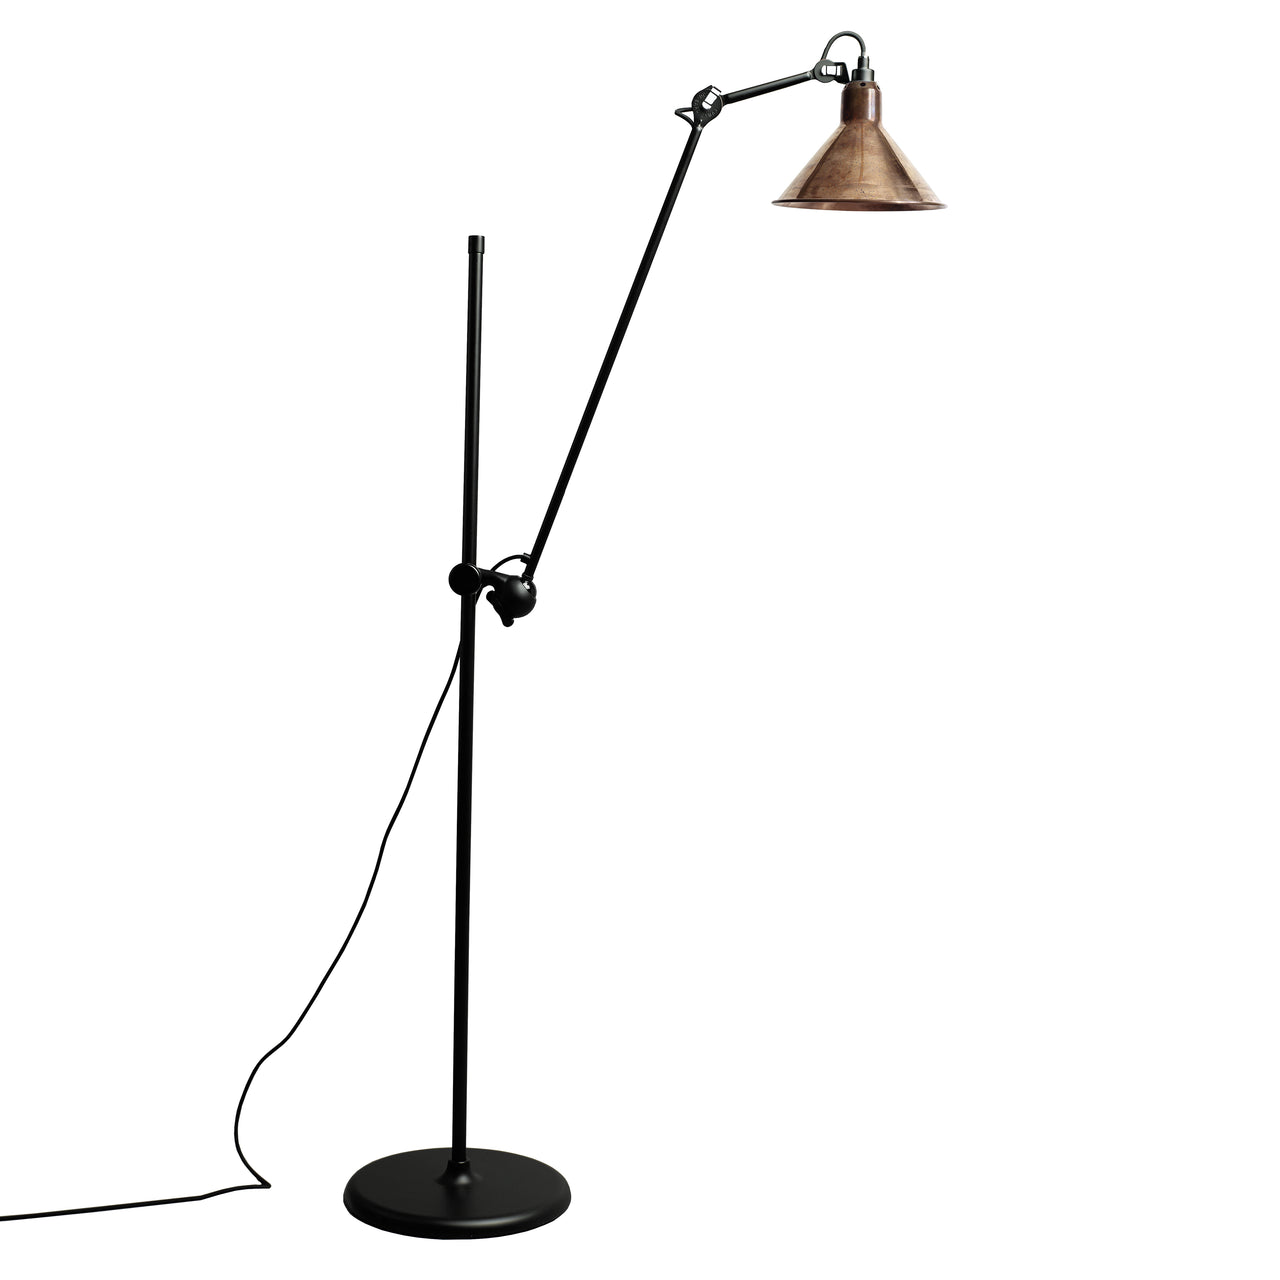 Lampe Gras N°215 Floor Lamp: Raw Copper + Conic